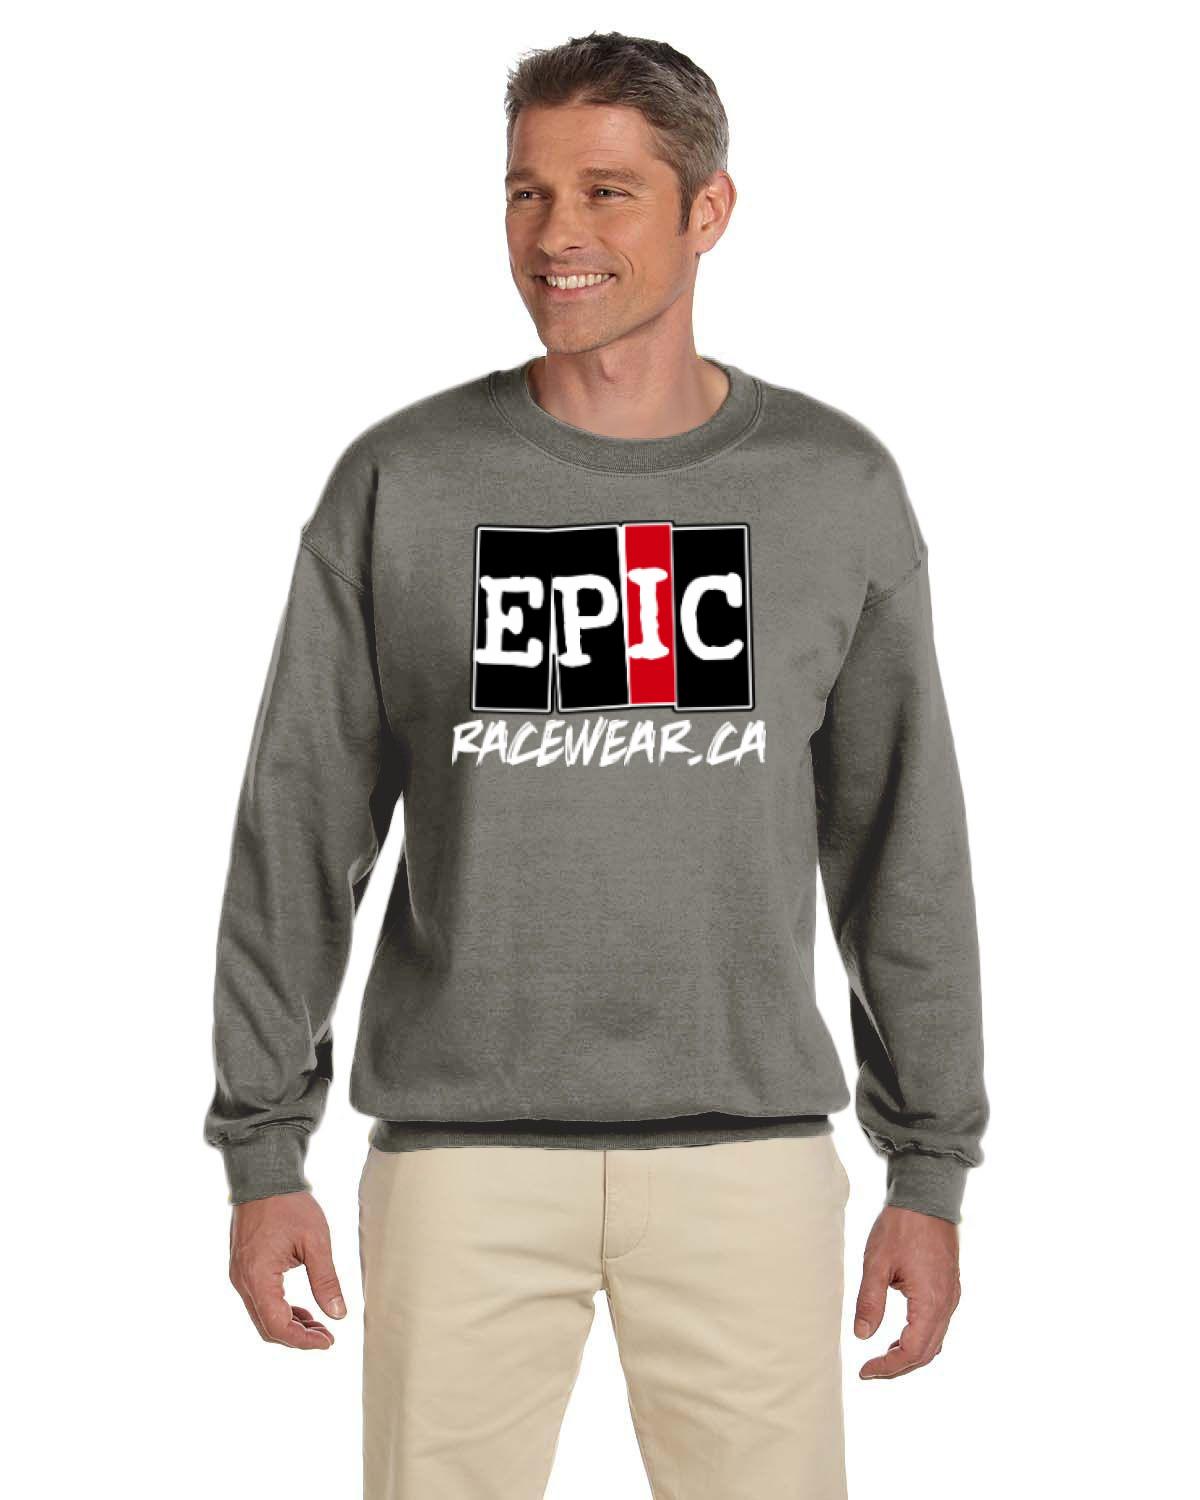 EPIC Racewear Crew Neck Sweater